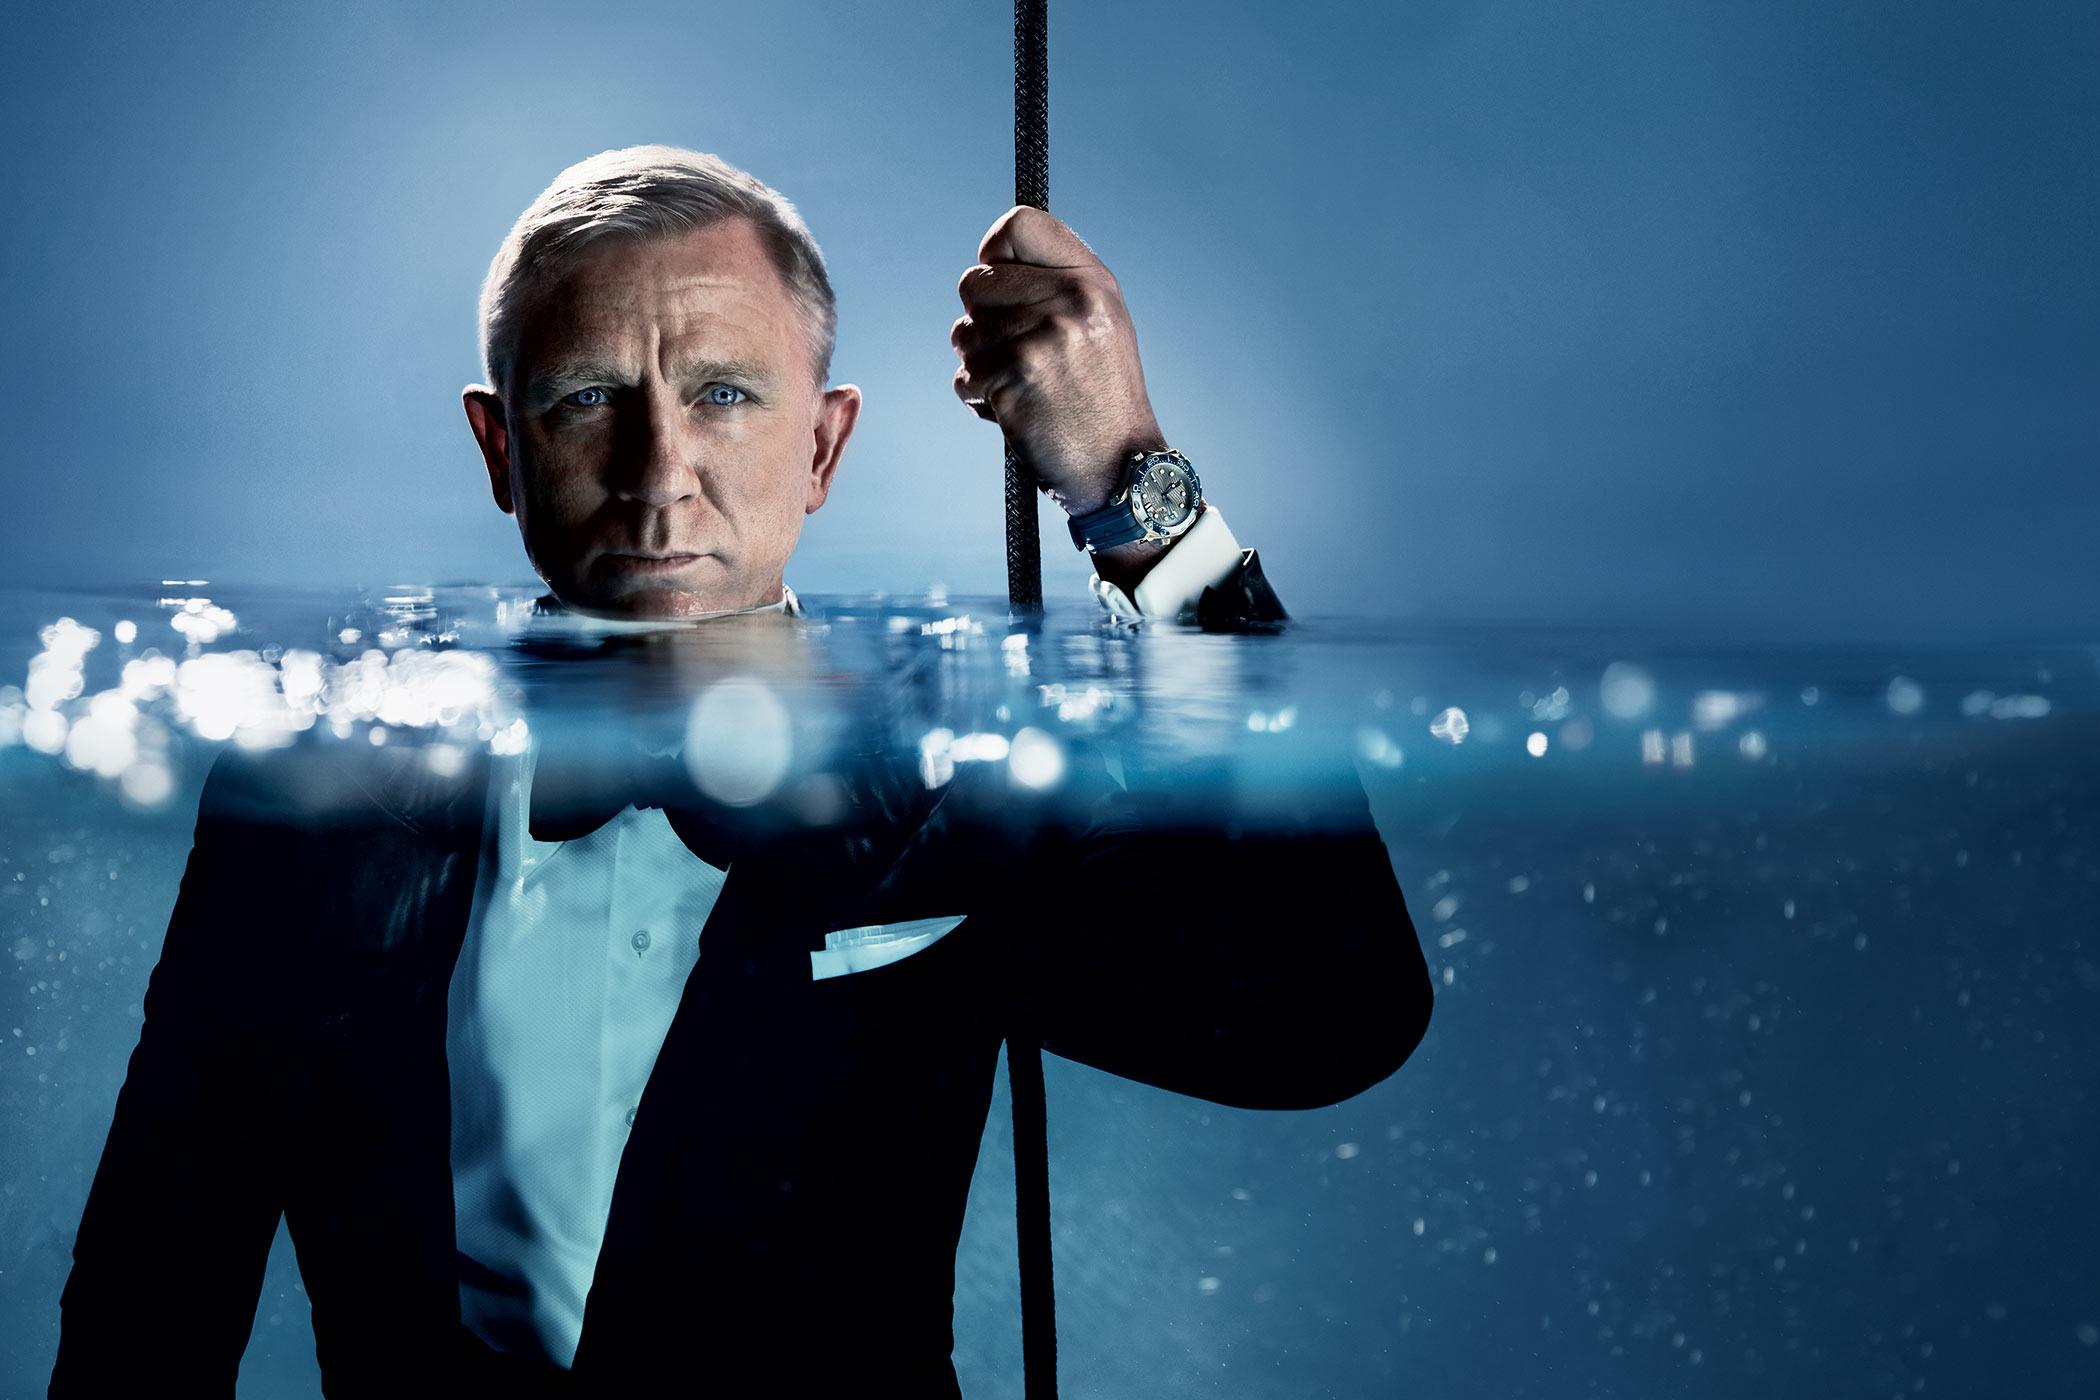 Omega Seamaster 300 - The best James Bond watch? - YouTube